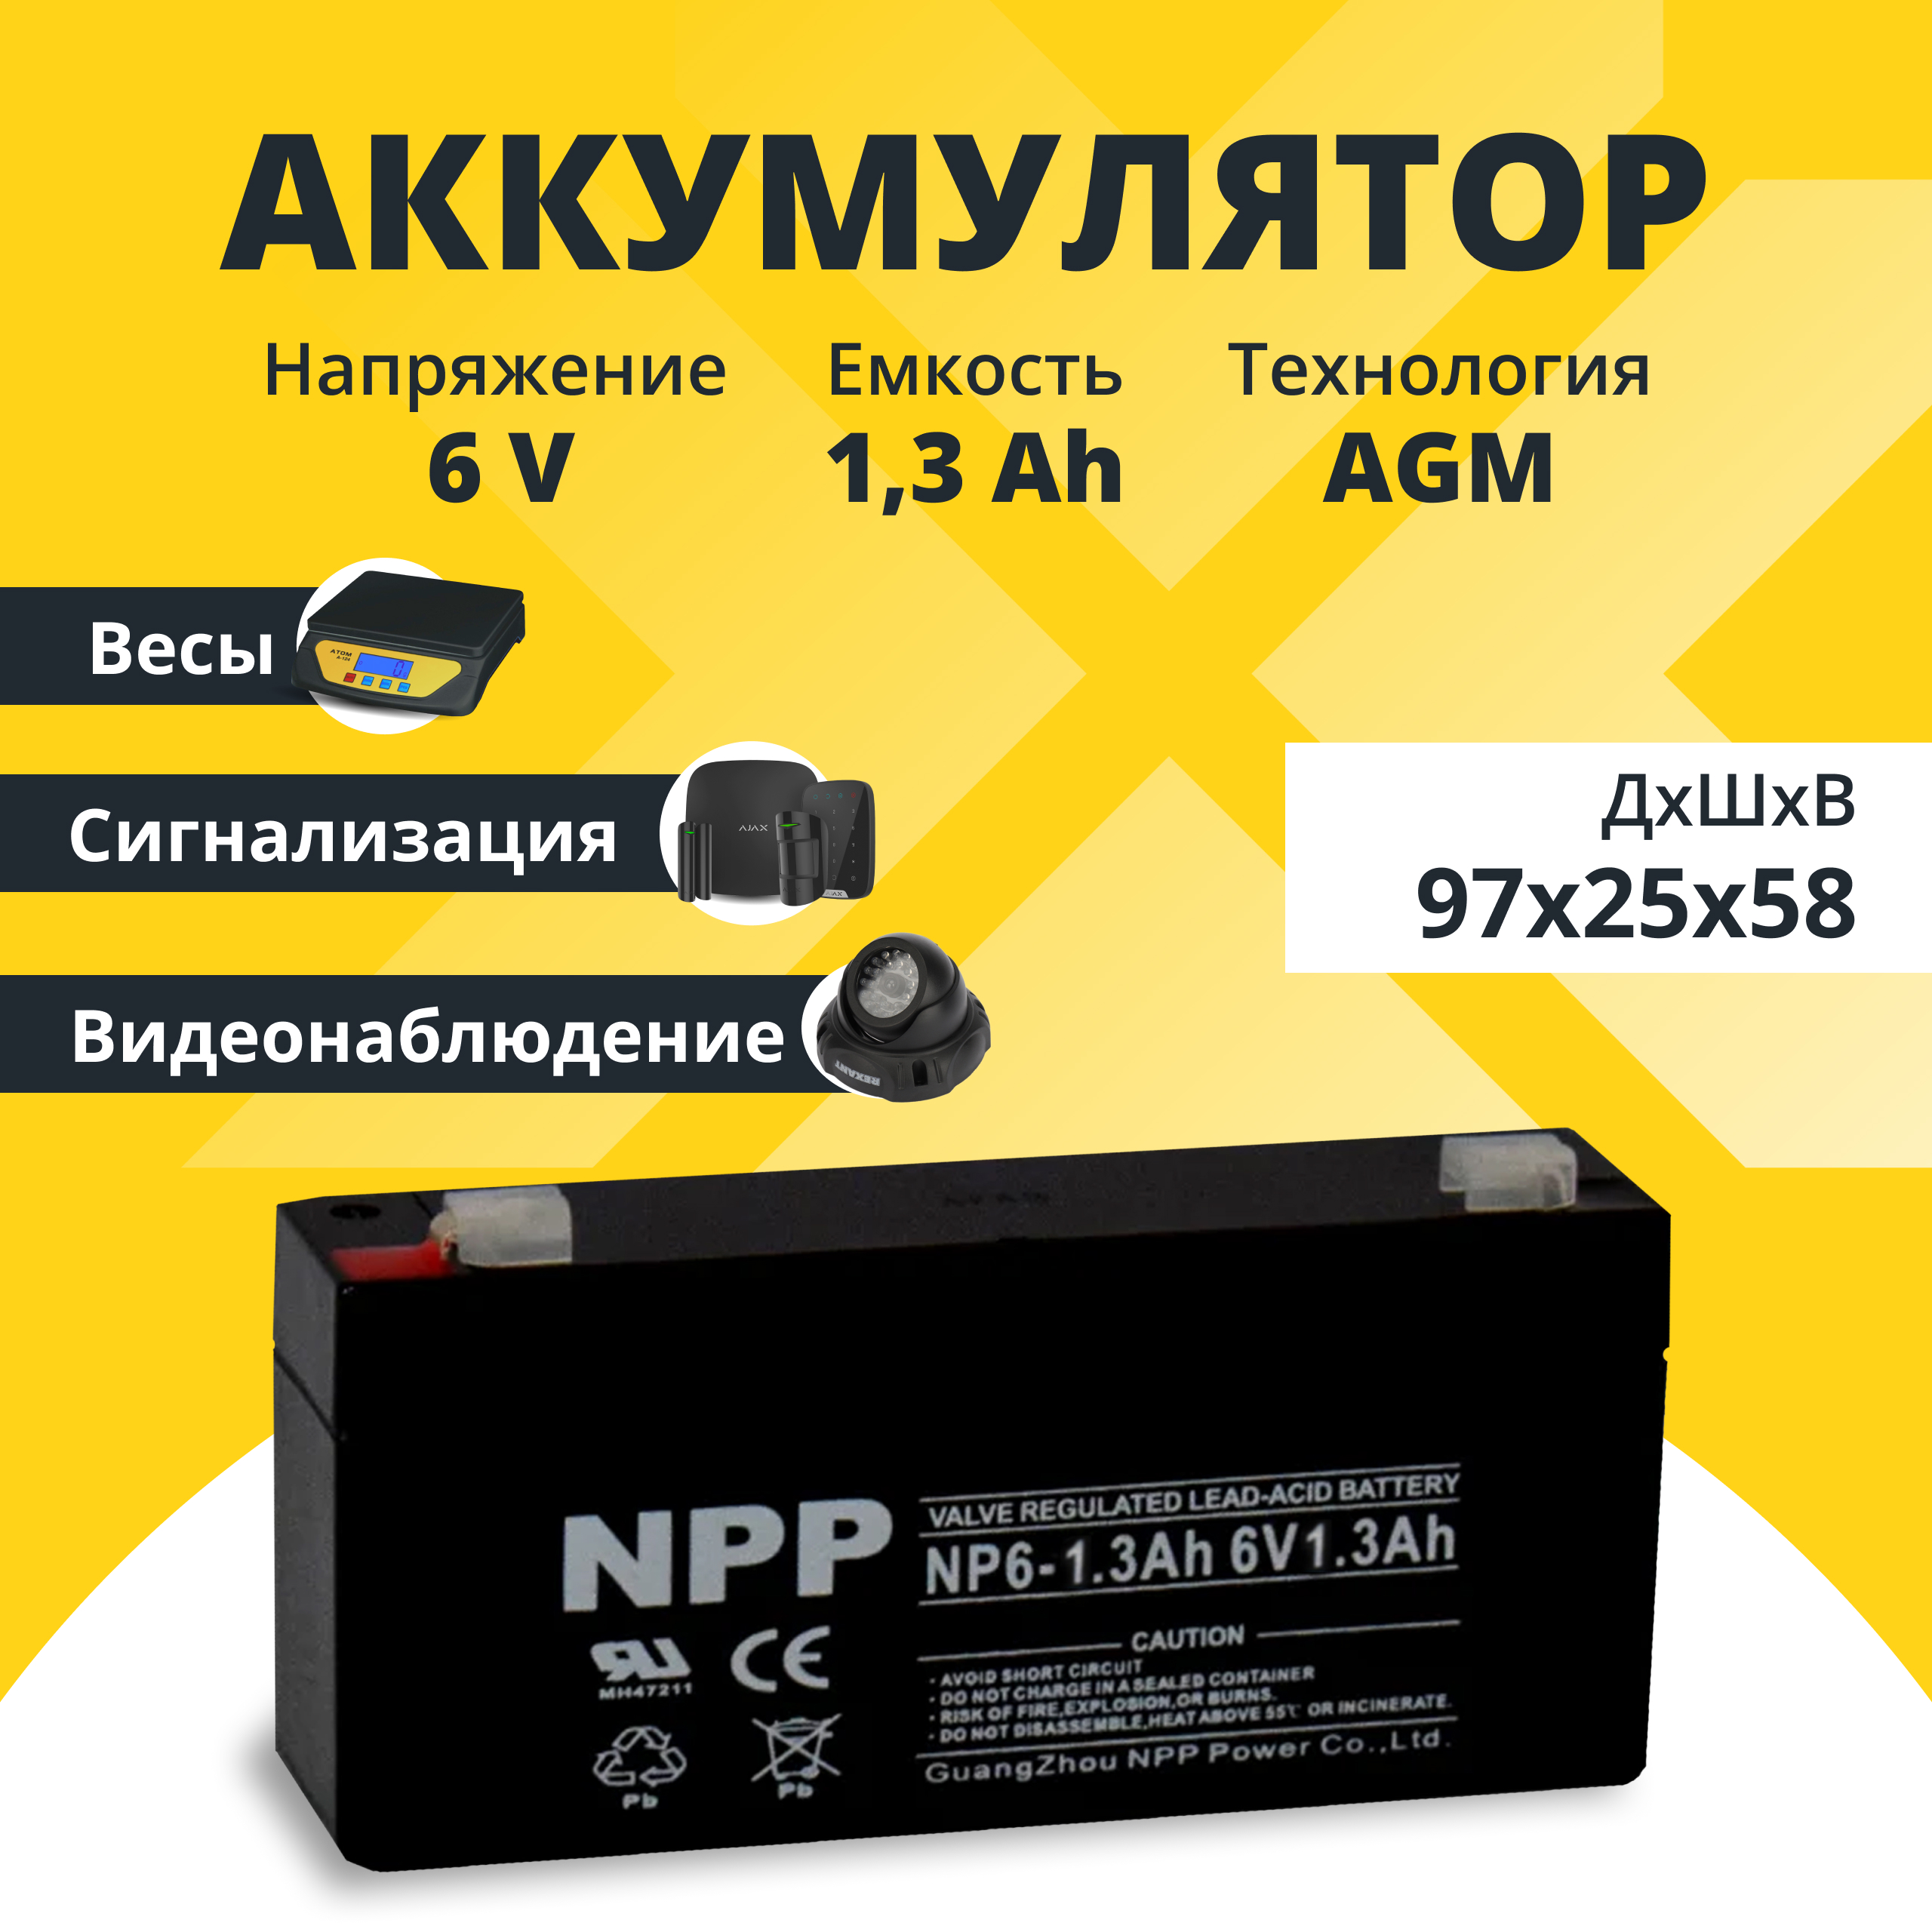 Аккумулятор для ибп NPP 6v 1.3Ah F1/T1 NP6-1.3Ah